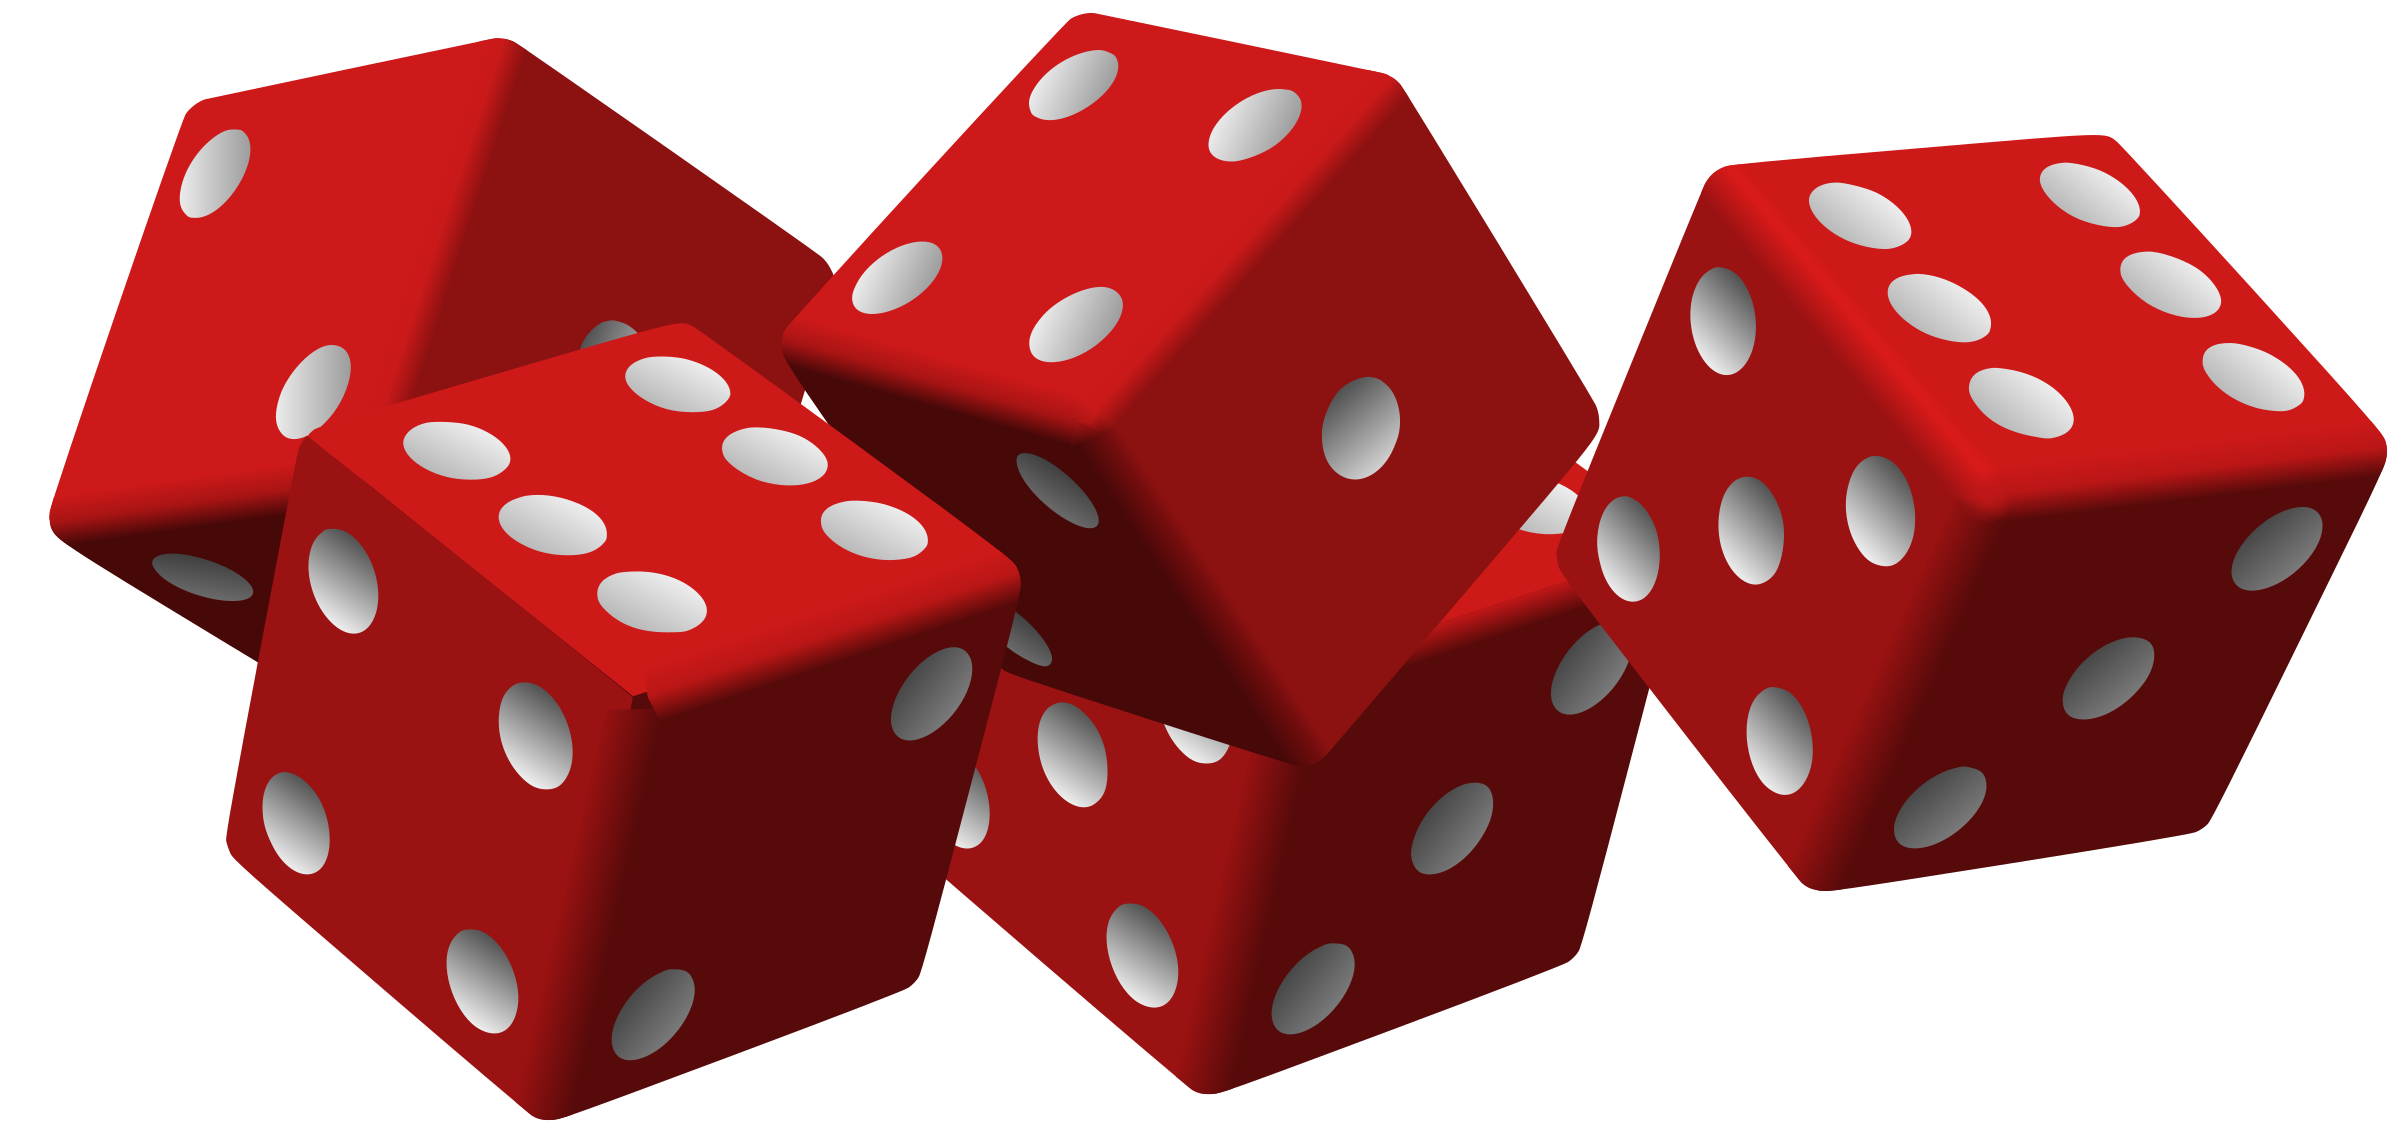 five red dice SVG Clip arts